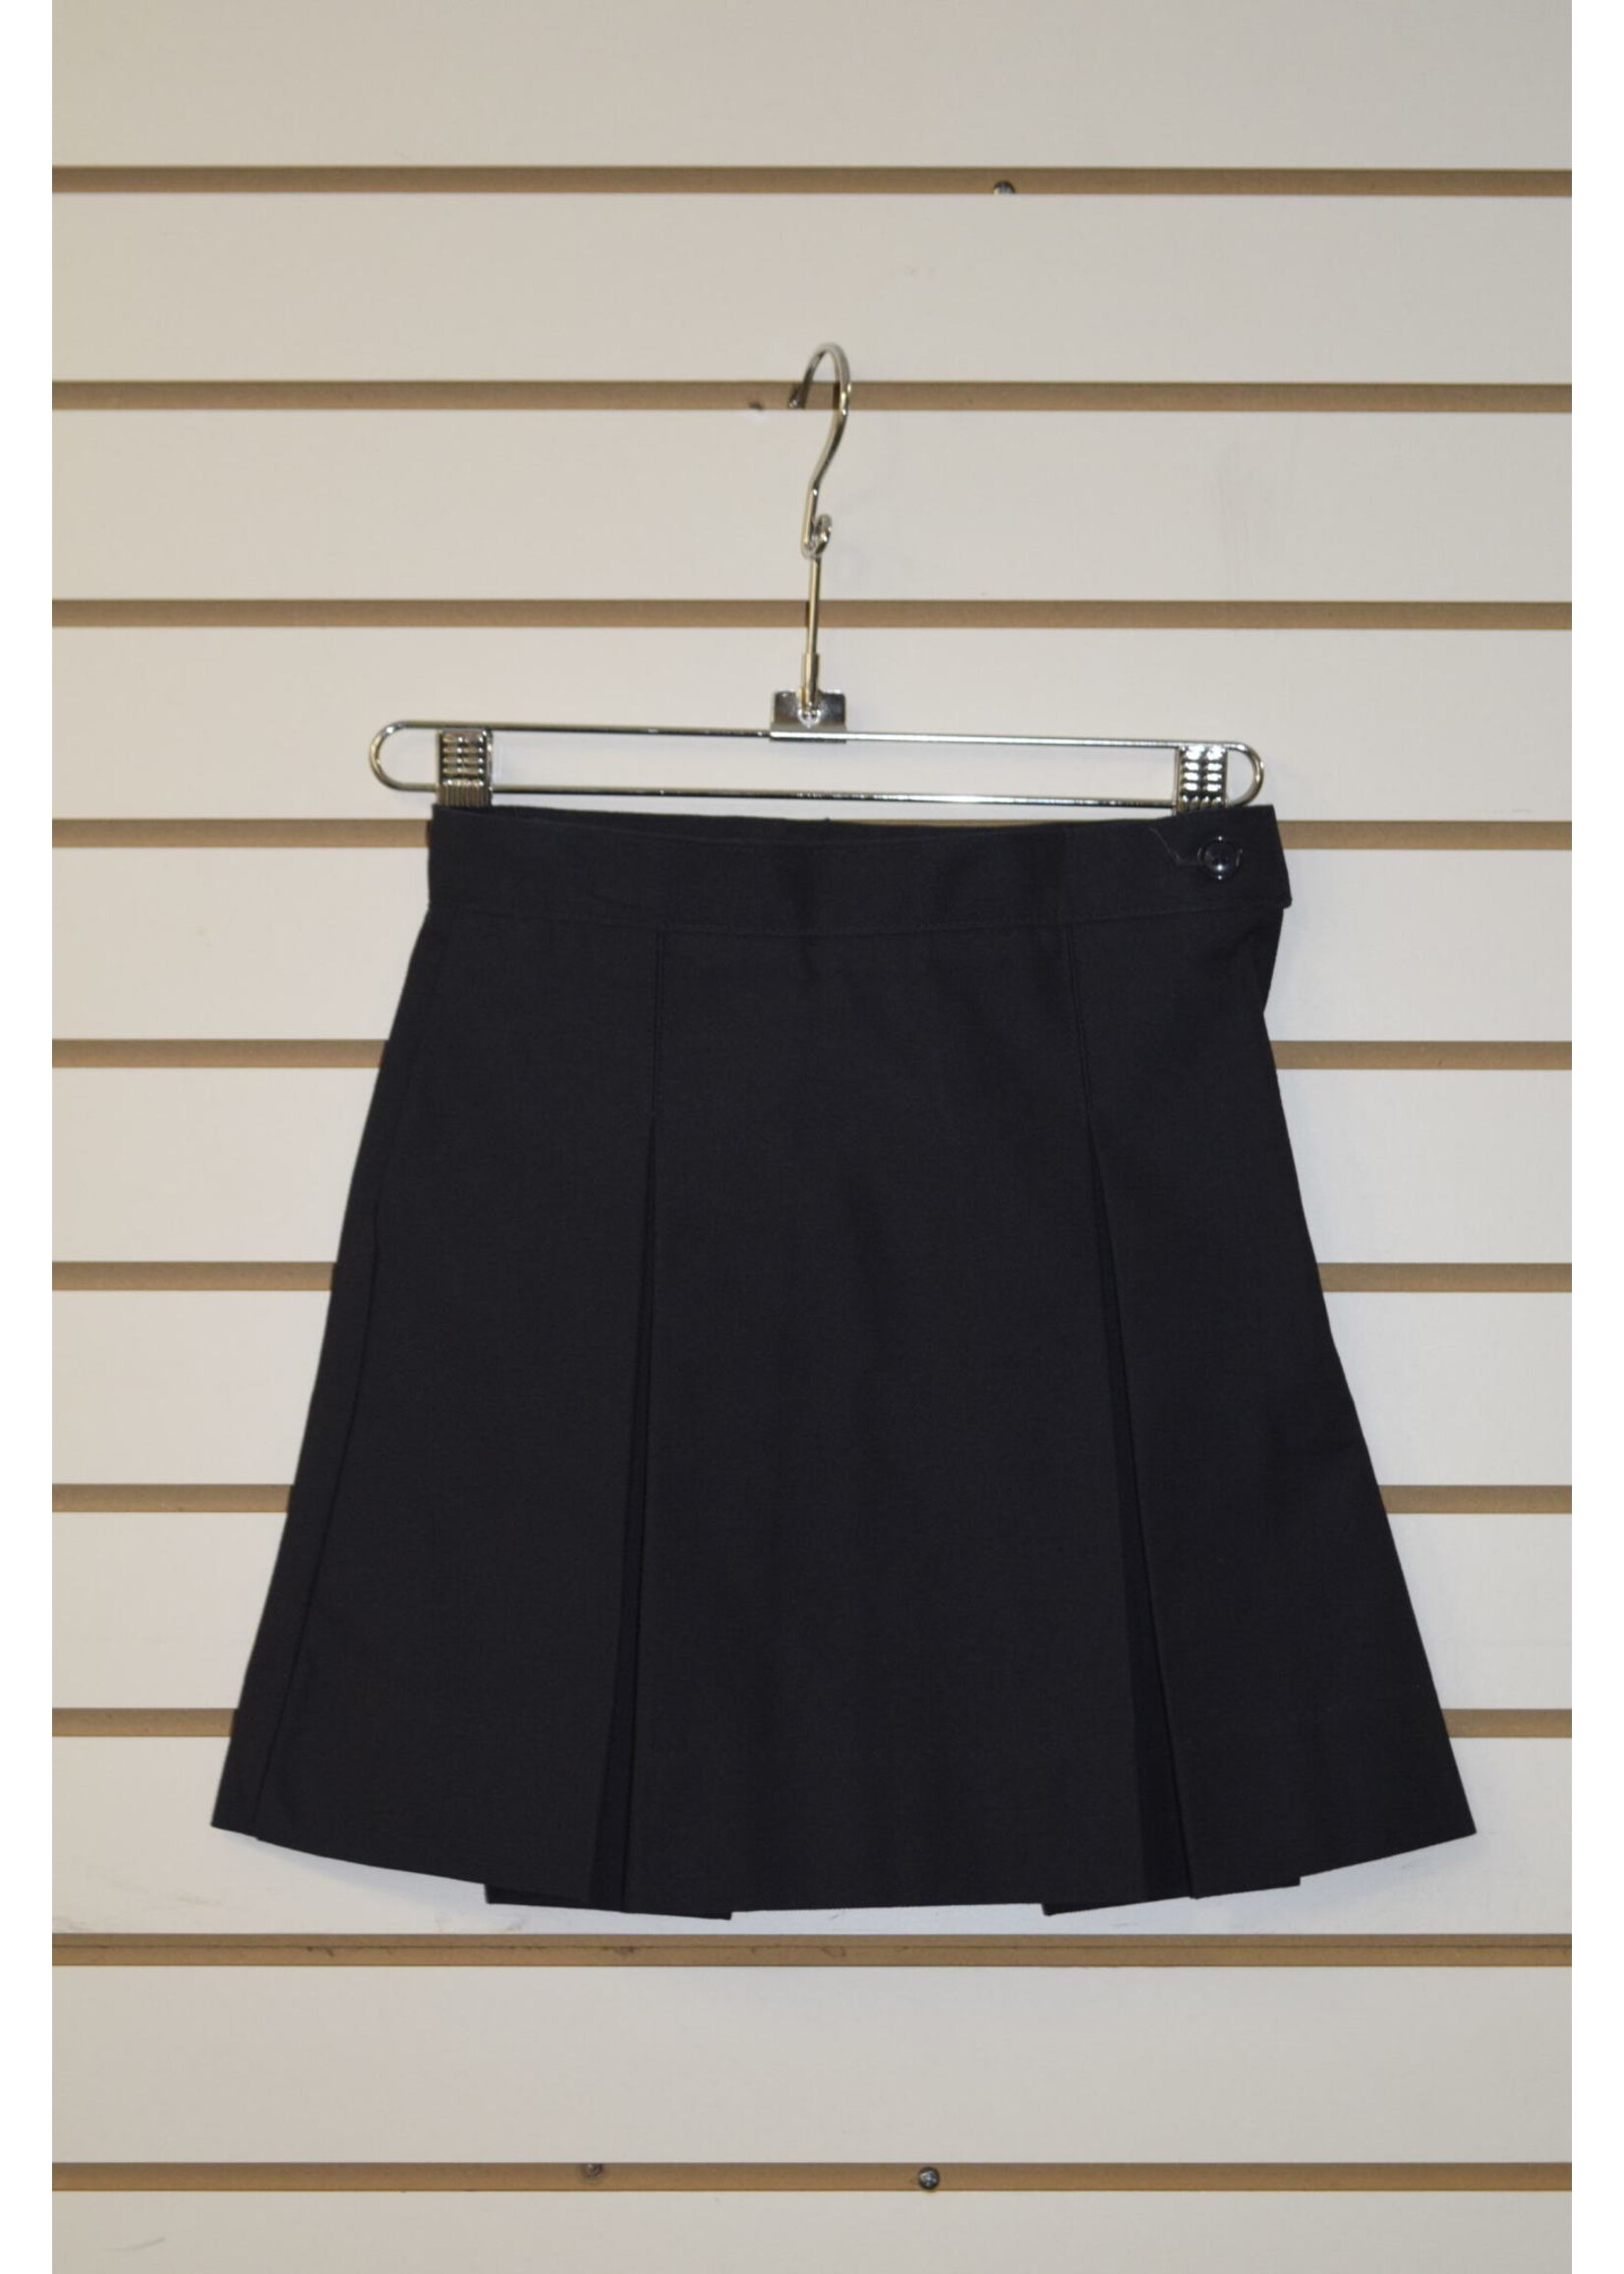 CLS 4 Pleat Black Skirt